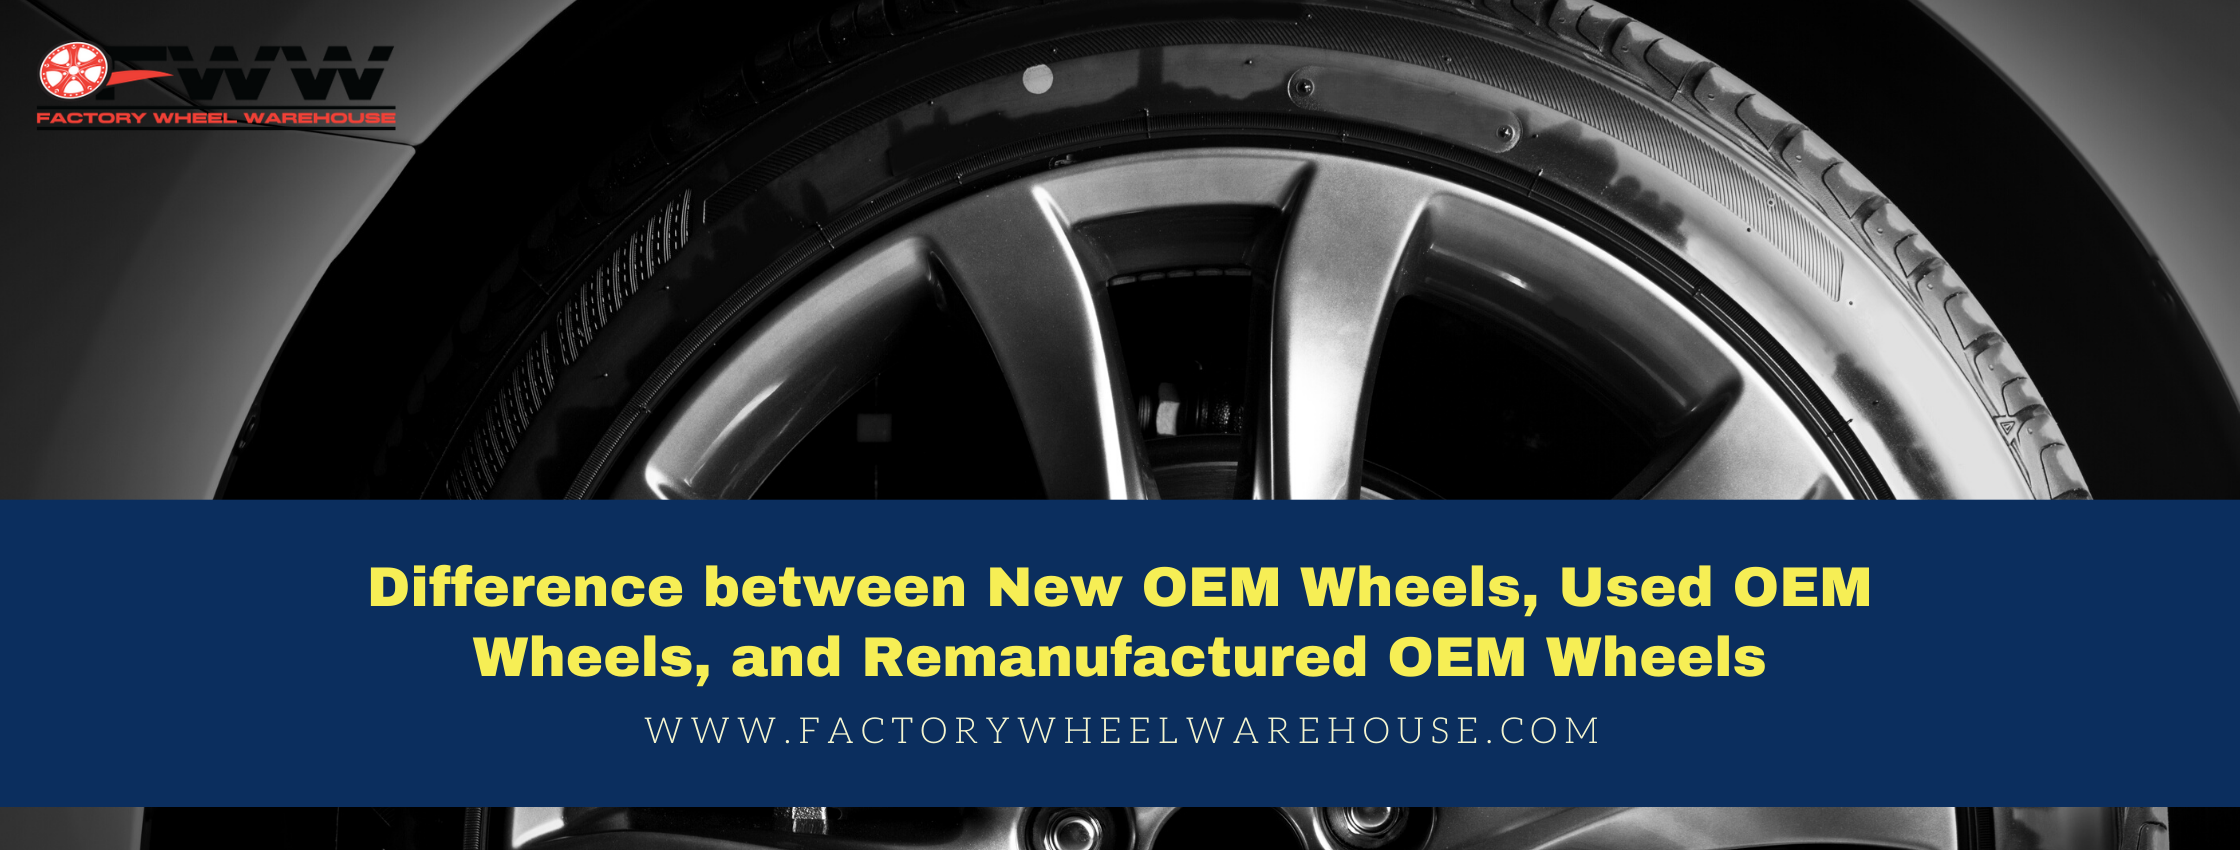 Difference between New OEM Wheels, Used OEM Wheels and Remanufactured OEM Wheels